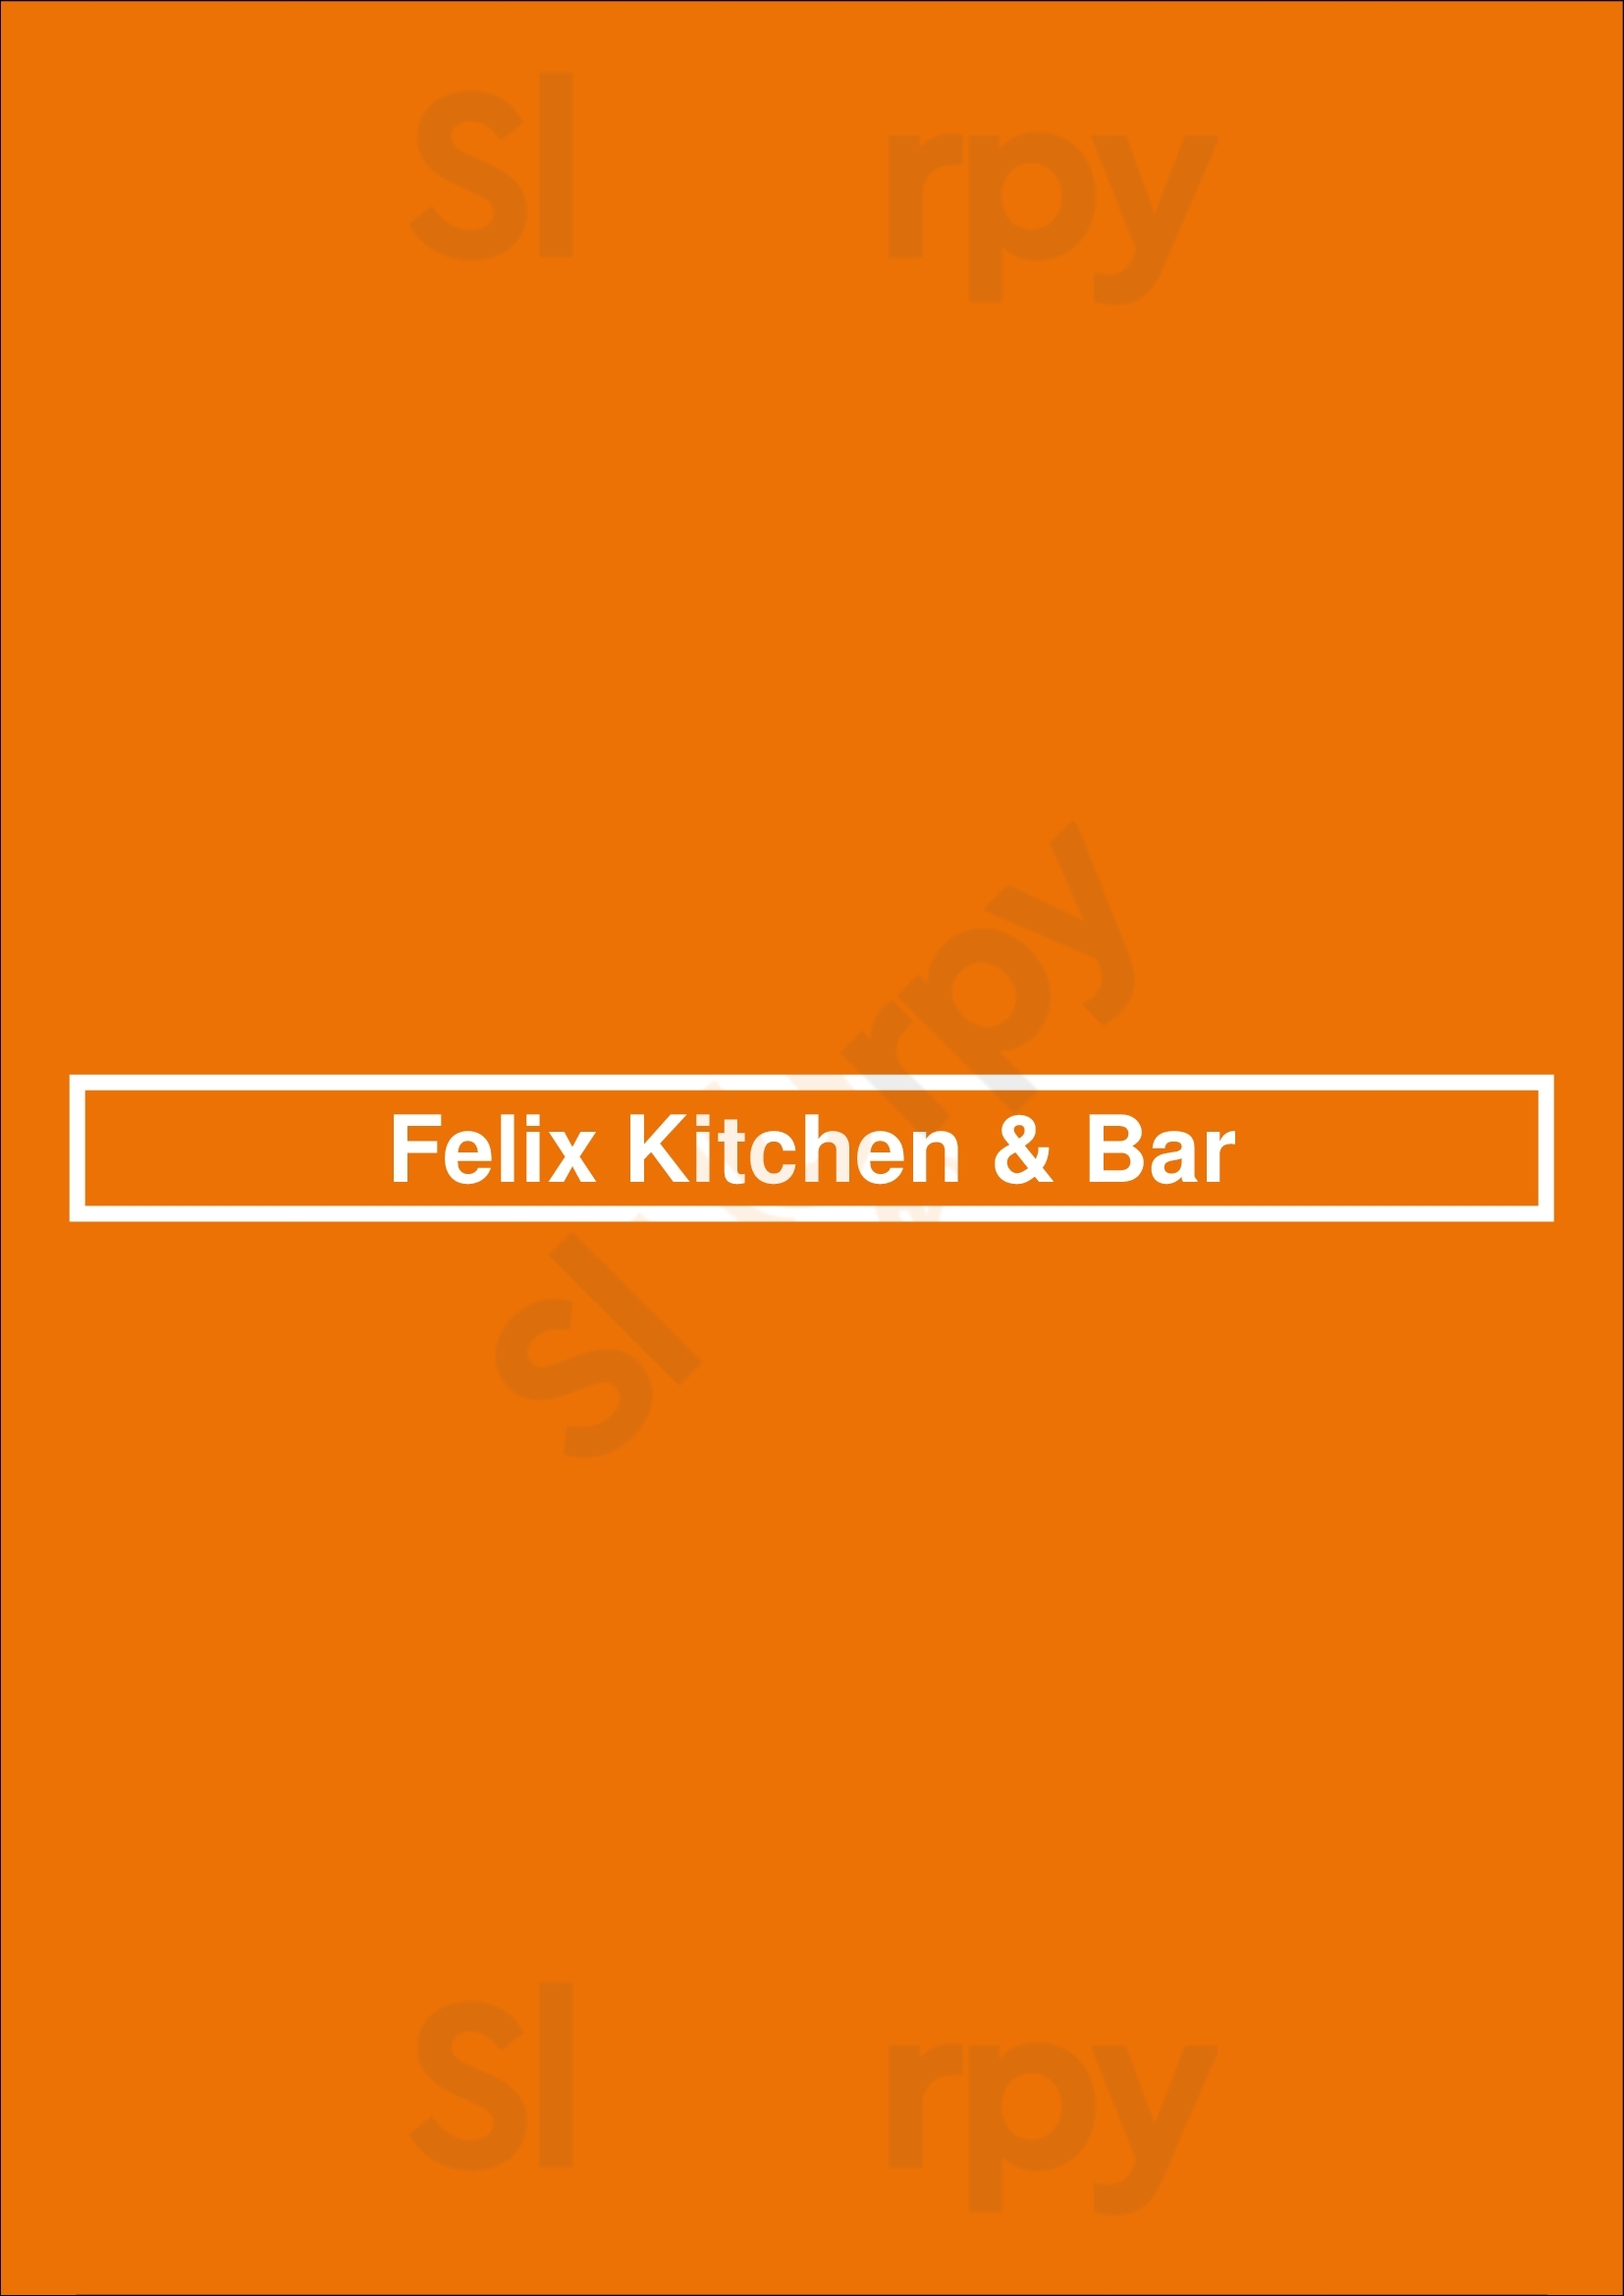 Felix Kitchen & Bar Budapest Menu - 1